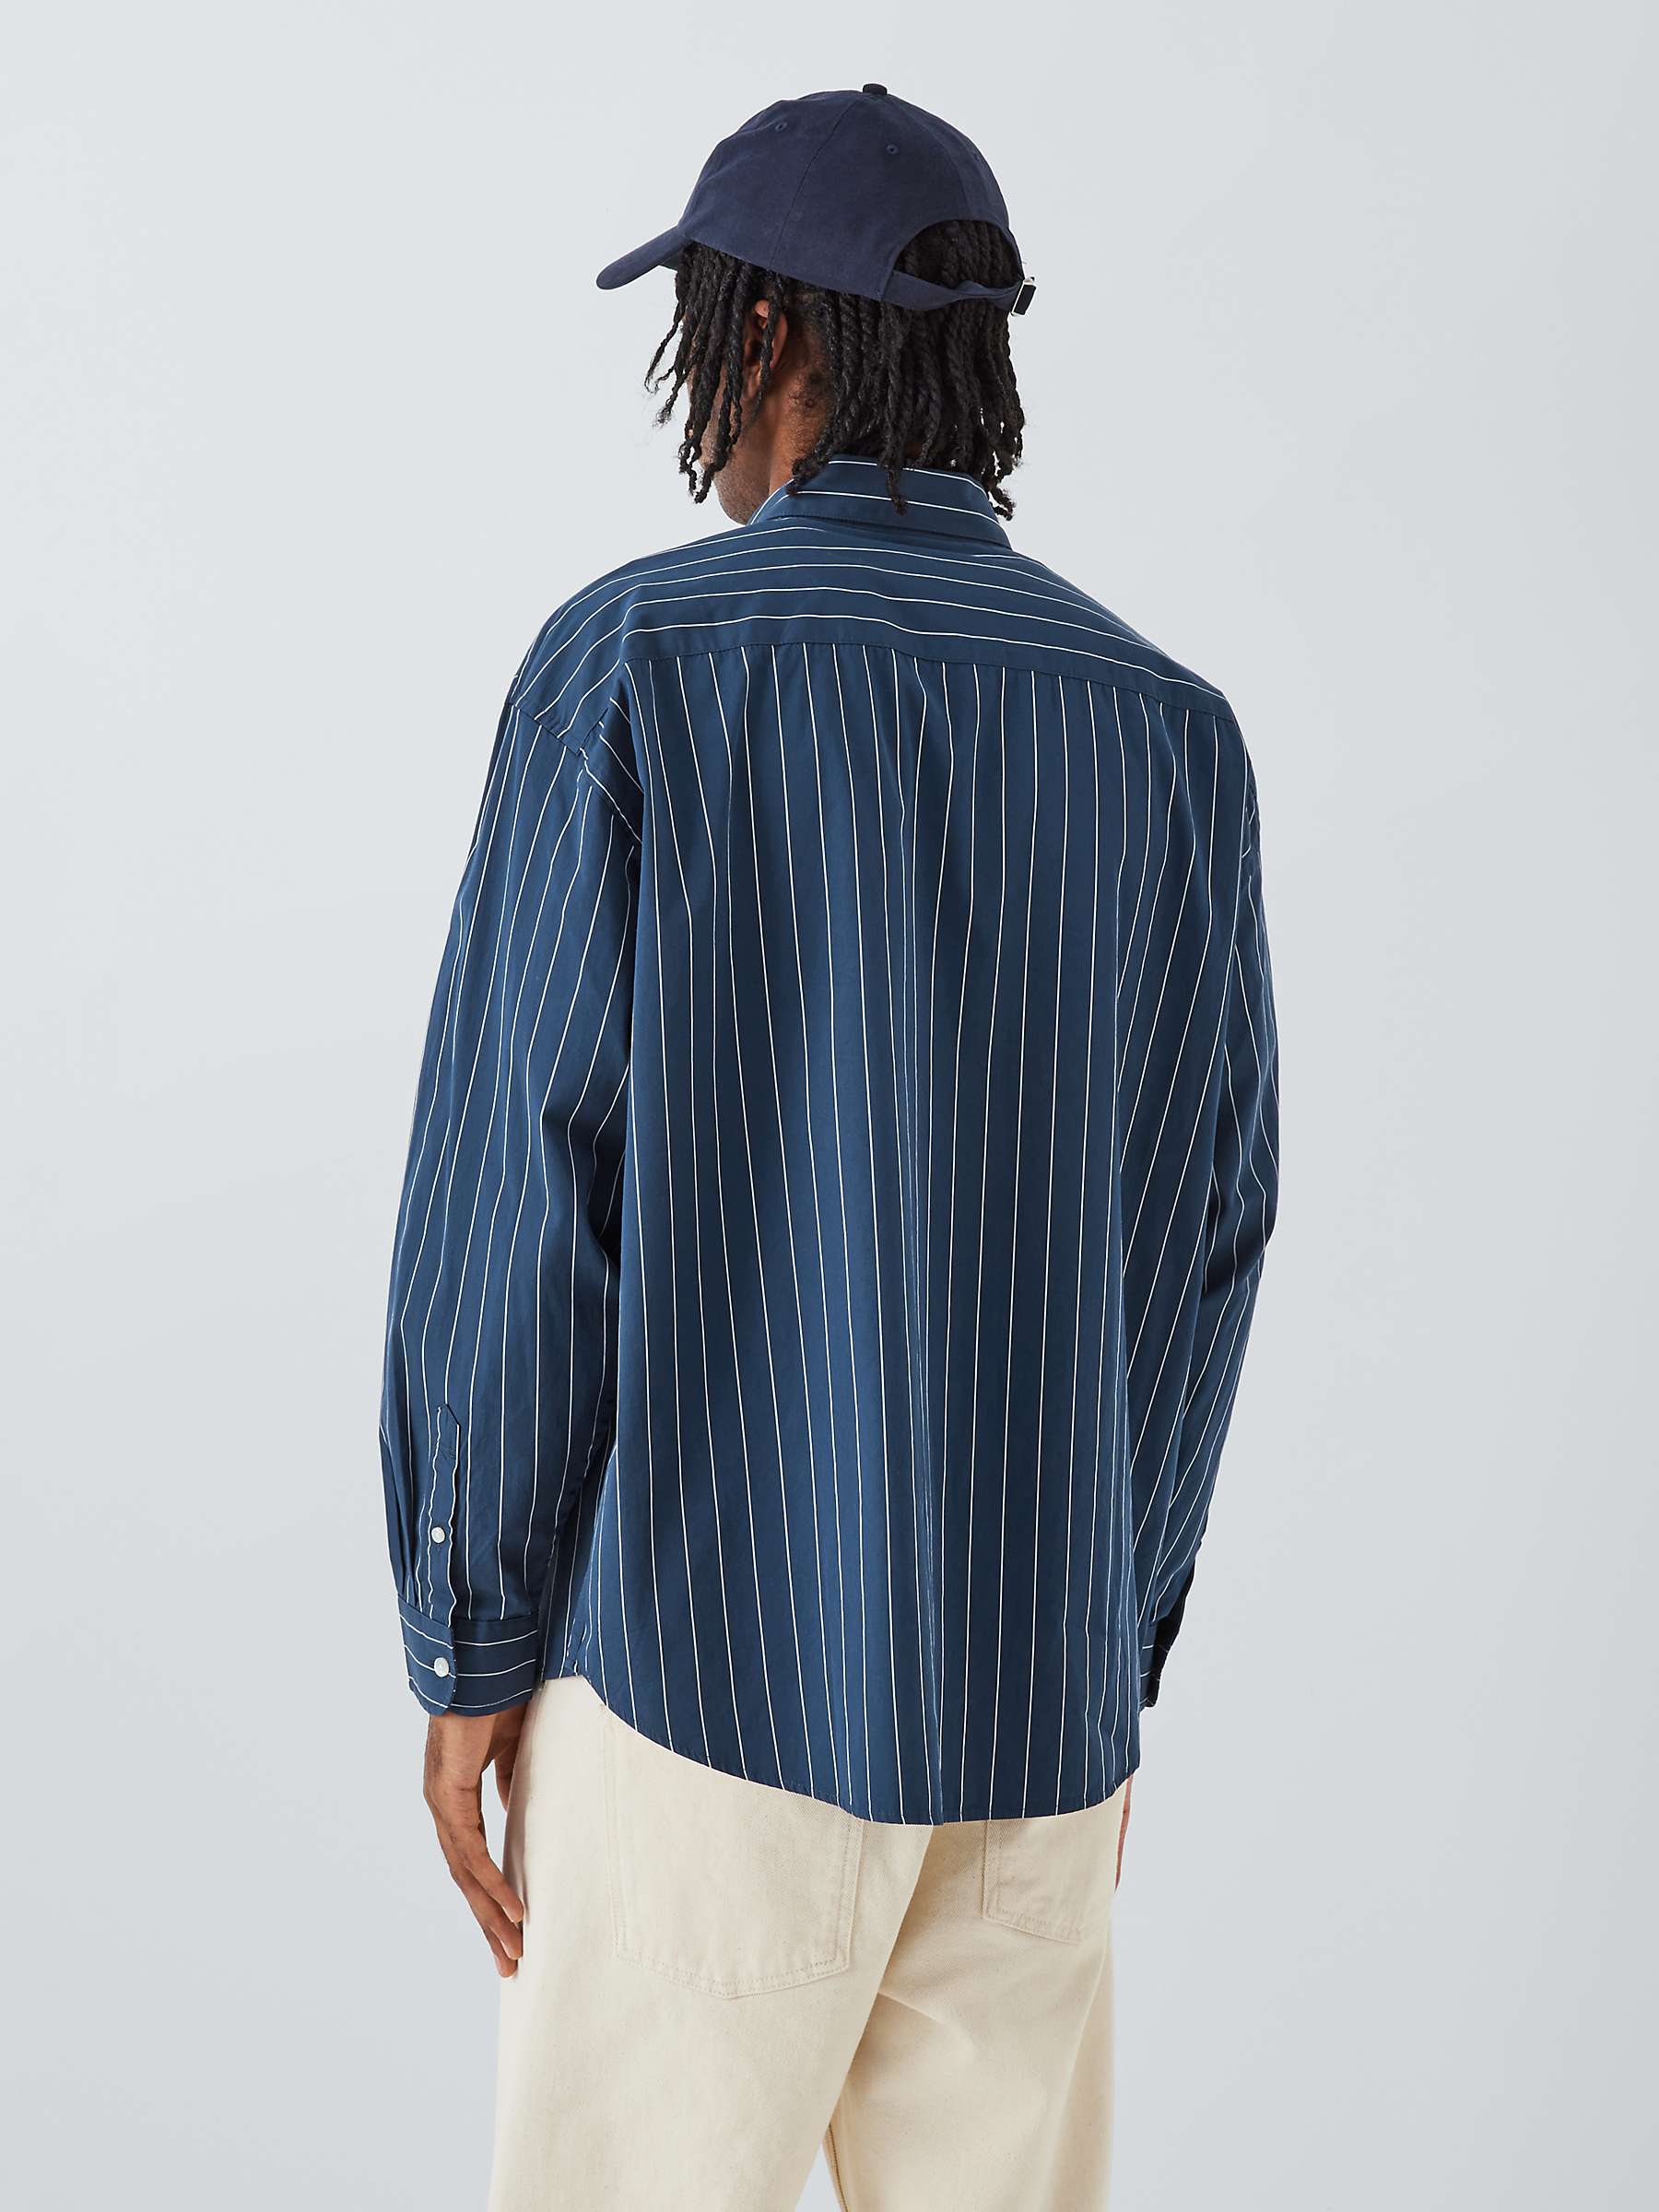 Buy Carhartt WIP Striped Cotton Poplin Shirt, Blue/White Online at johnlewis.com